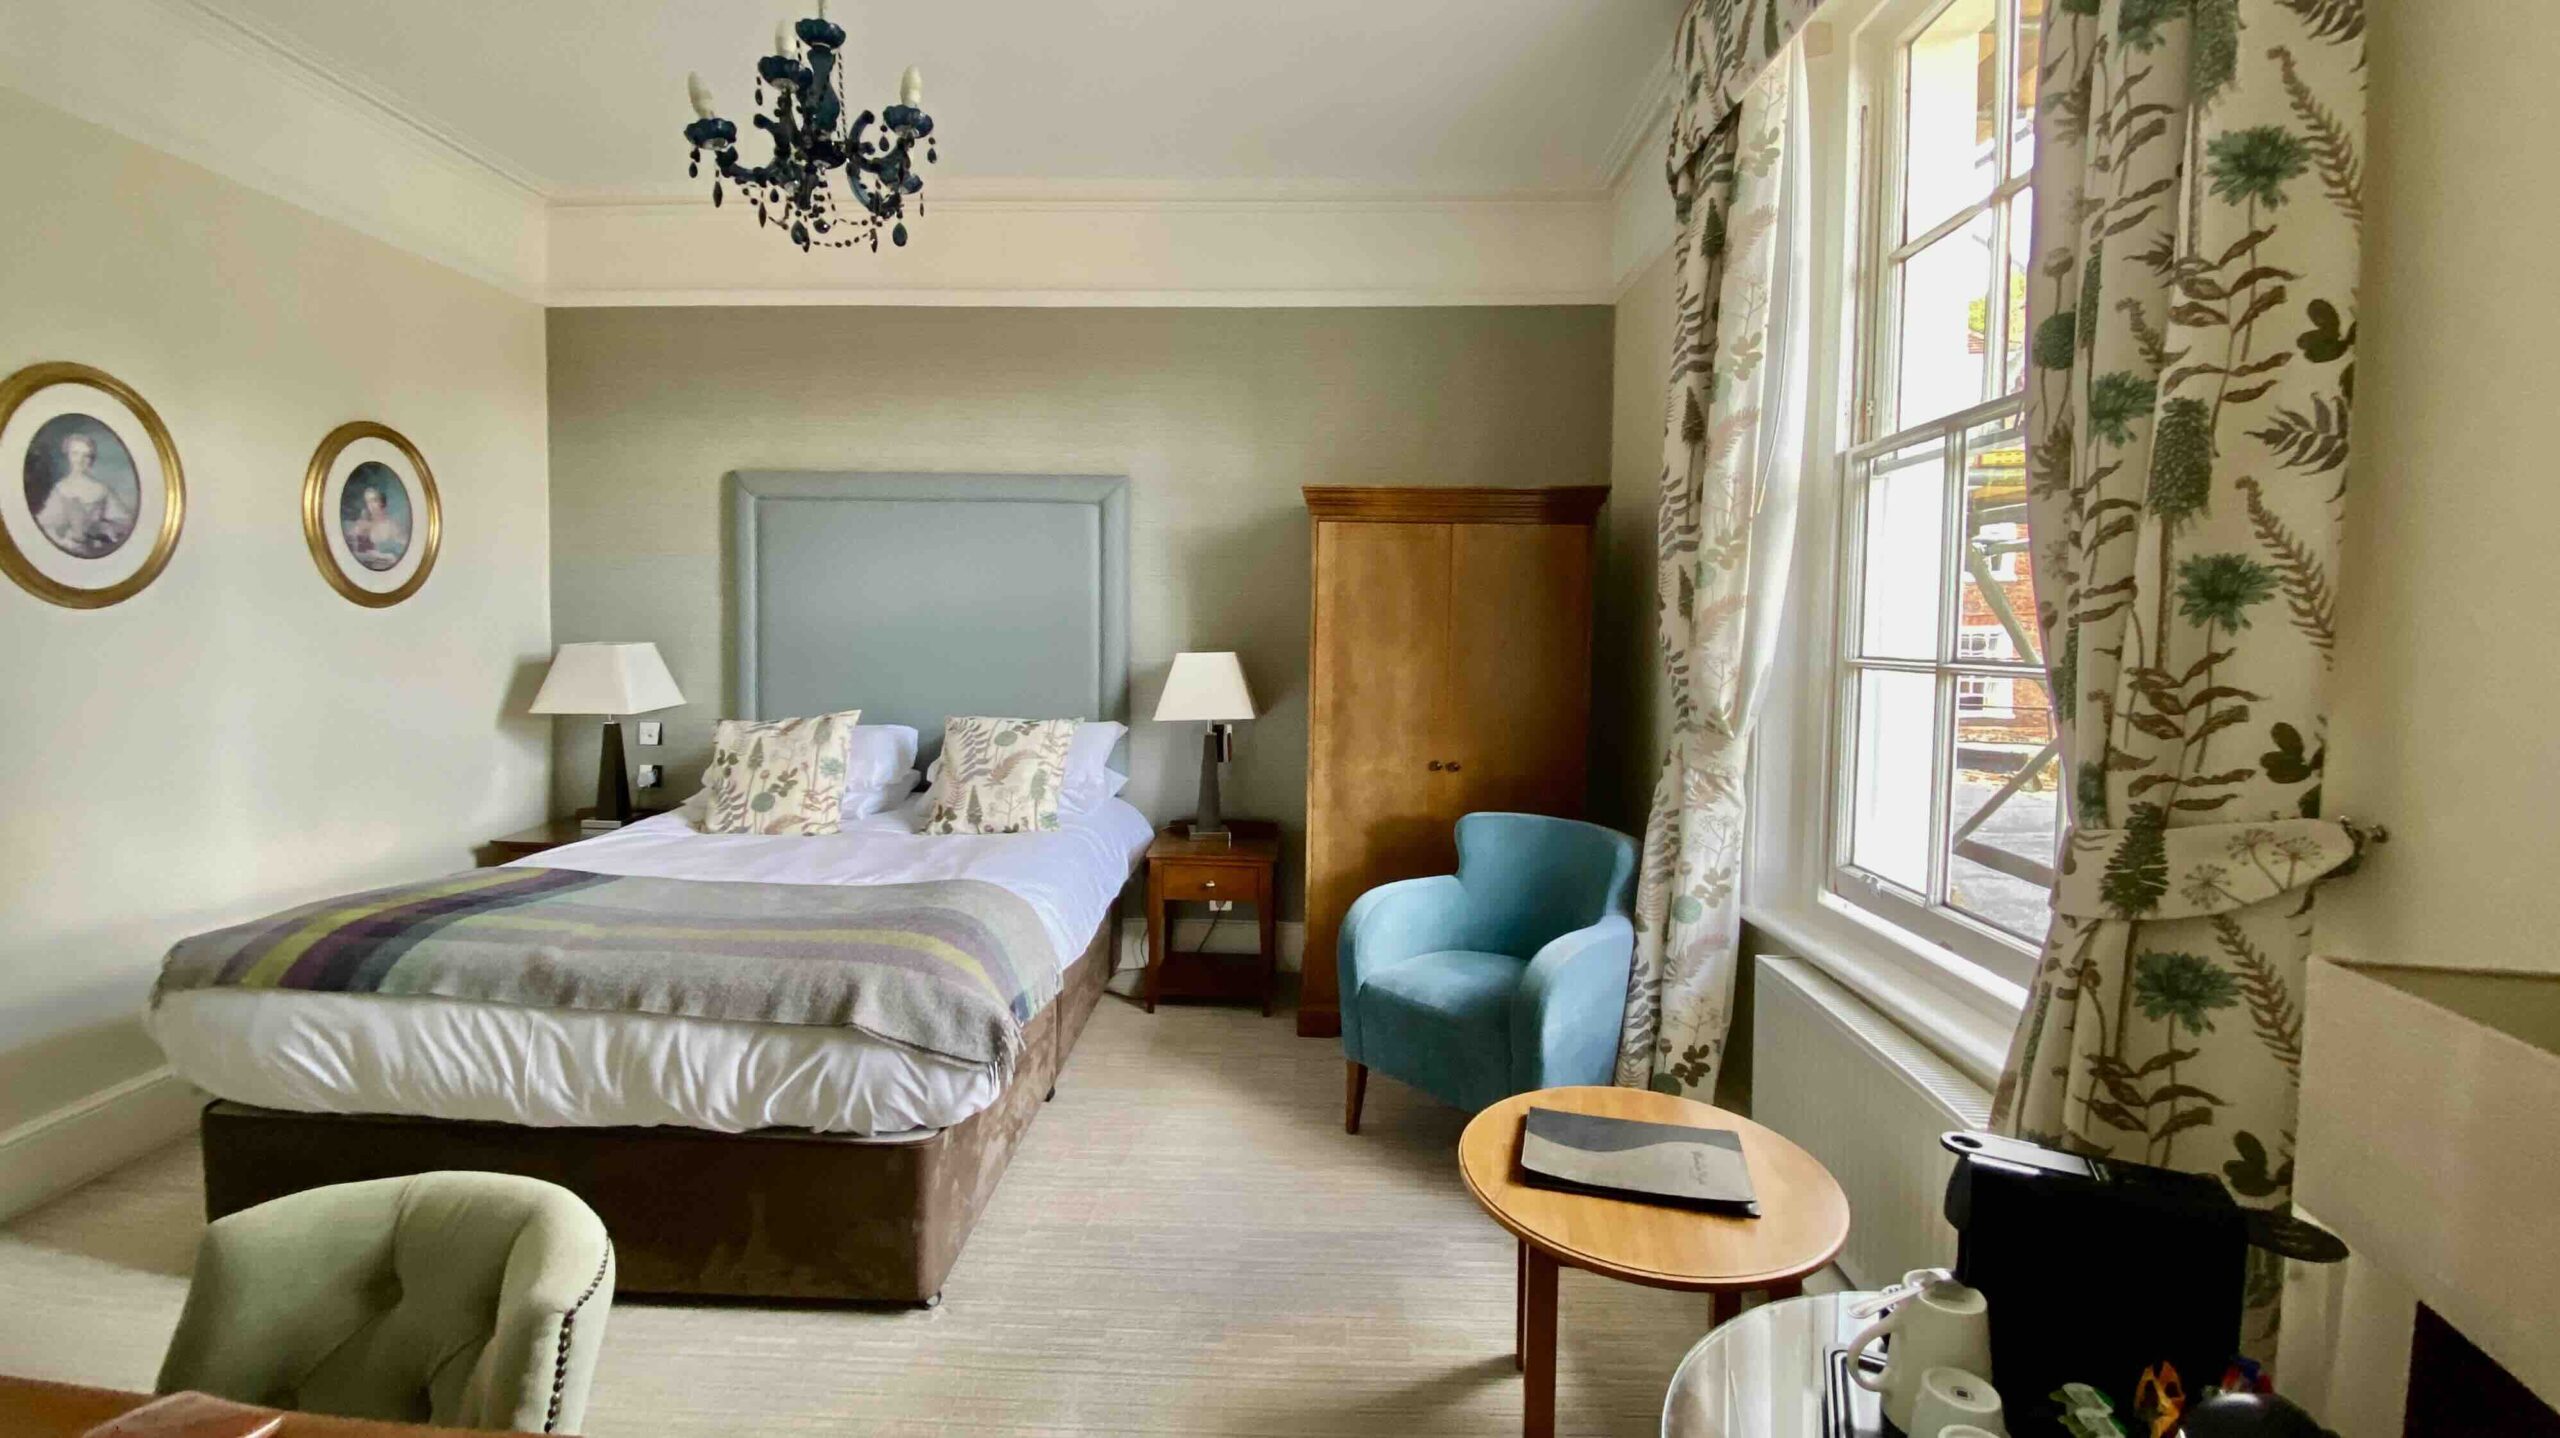 Winchester Royal Hotel, bedroom photo bt Bryan dearsley